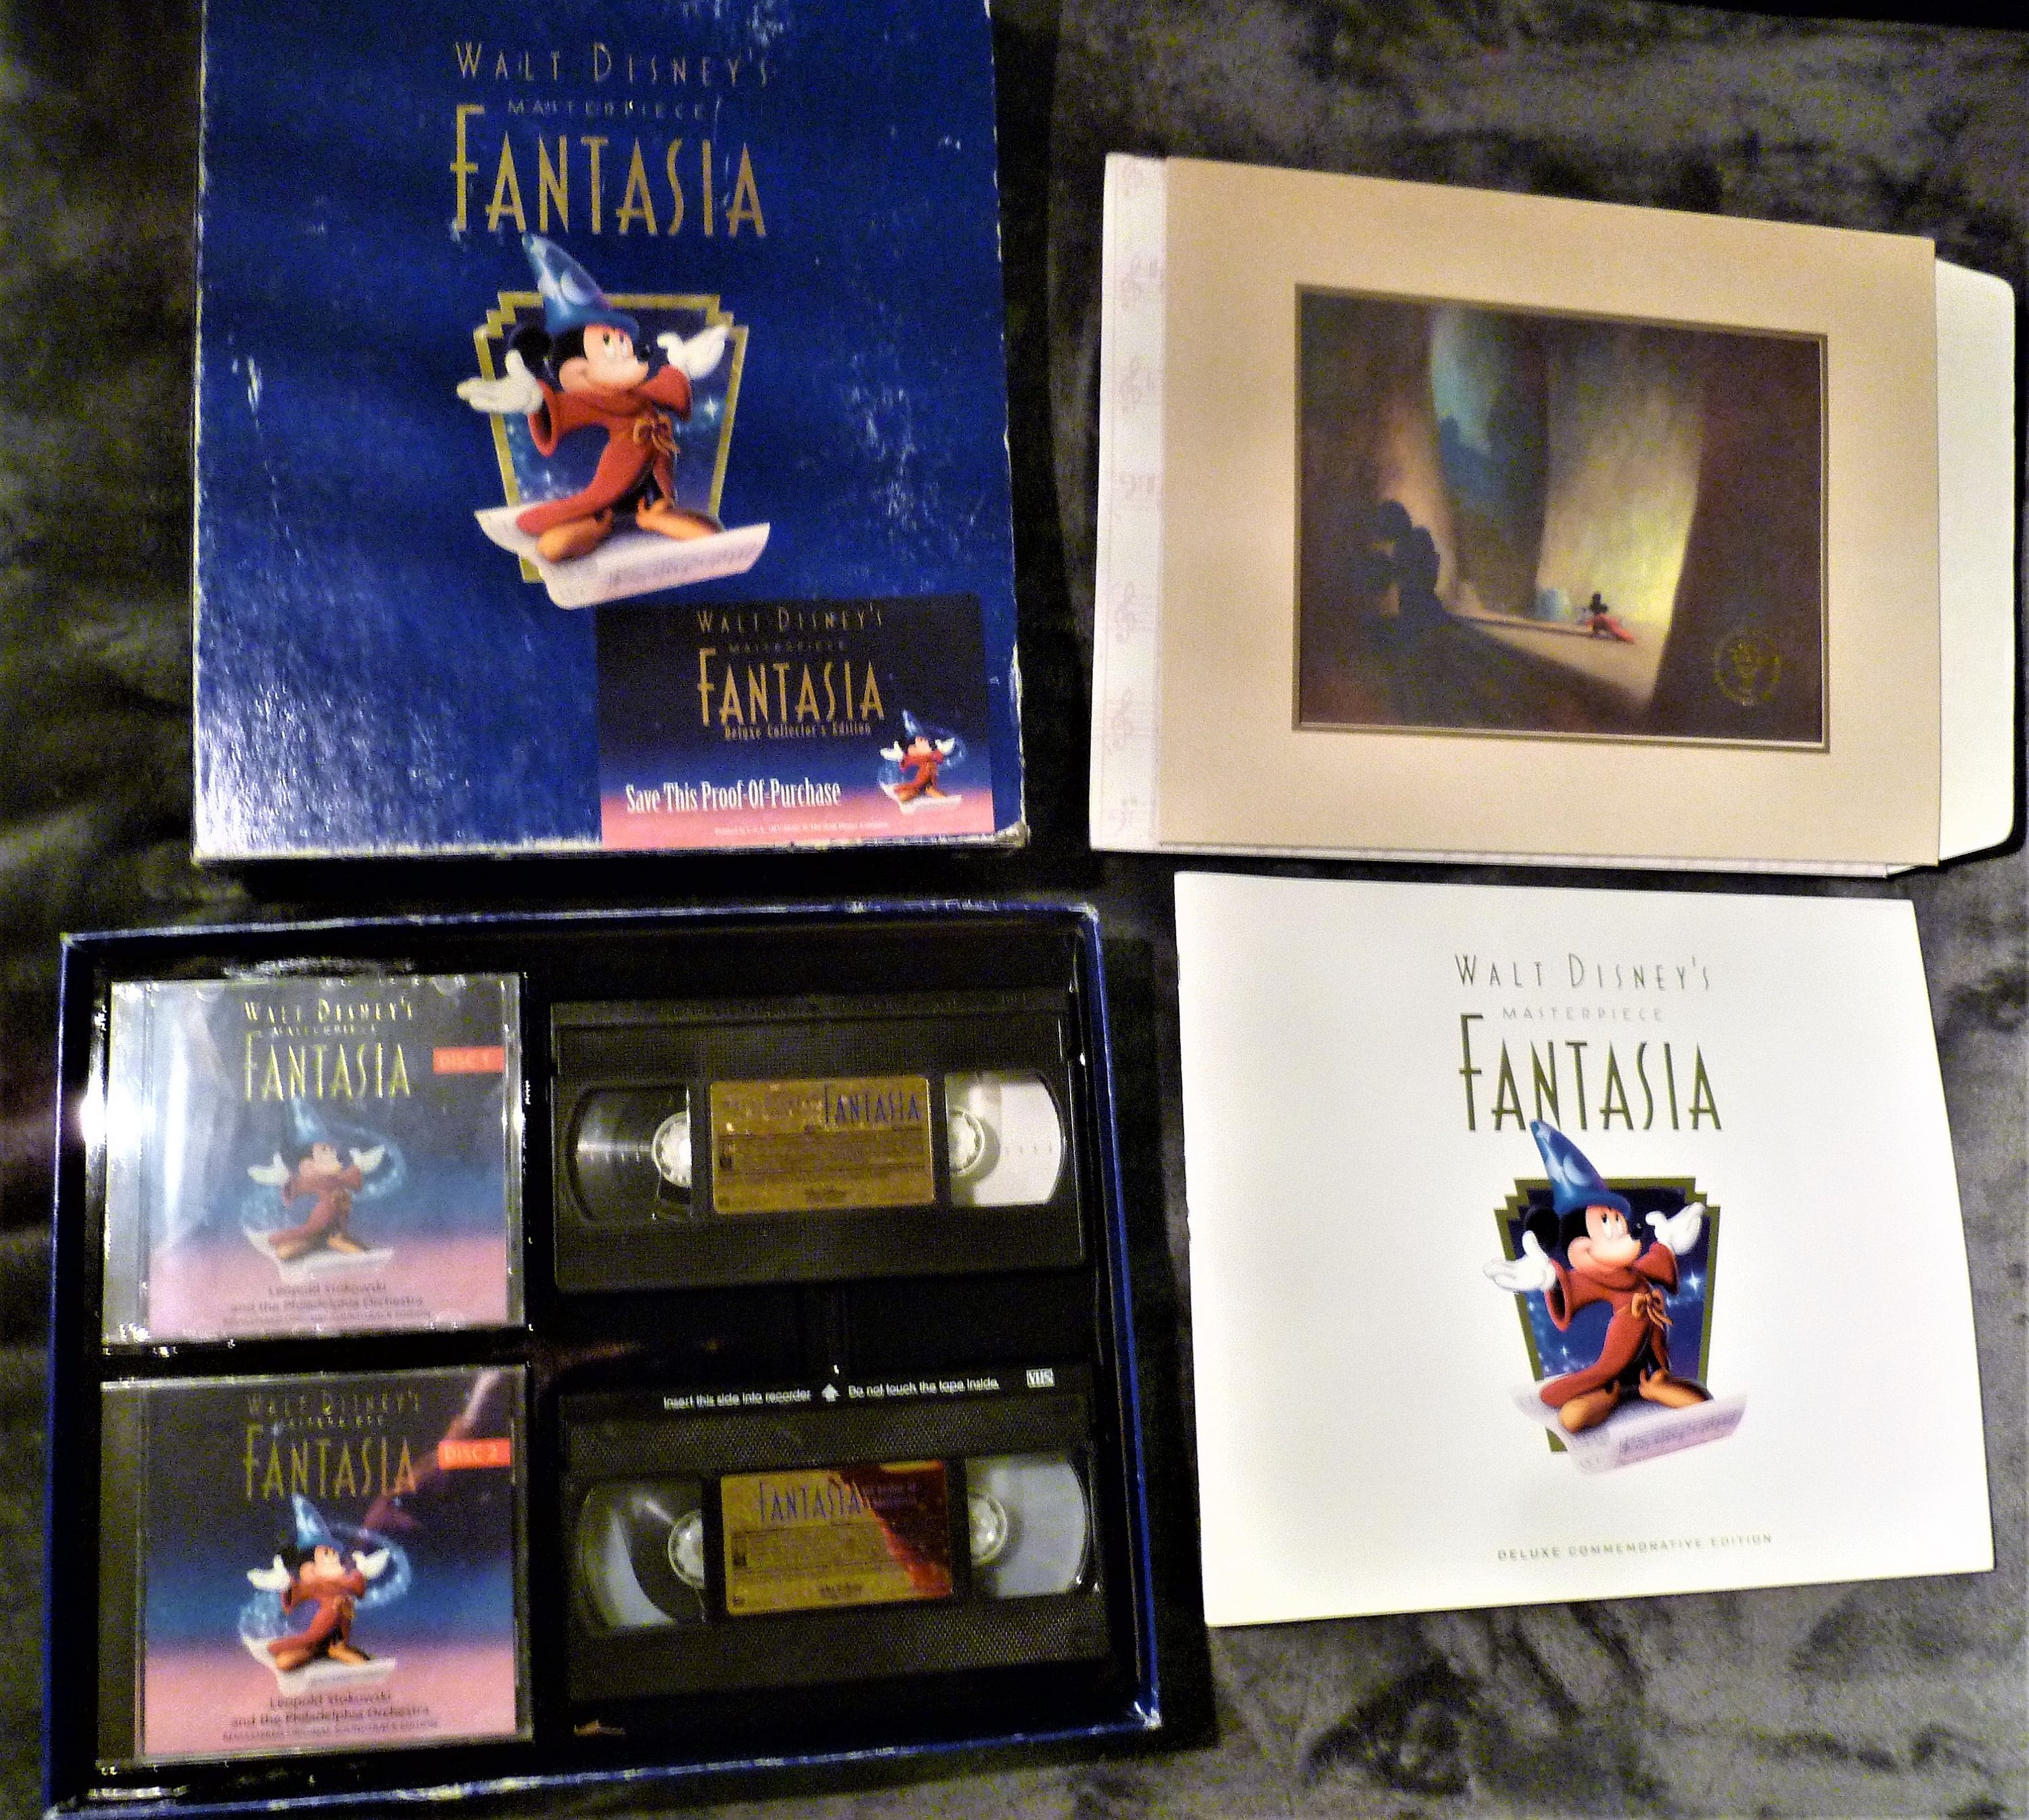 Walt Disney S Masterpiece Fantasia Deluxe Collector S Etsy